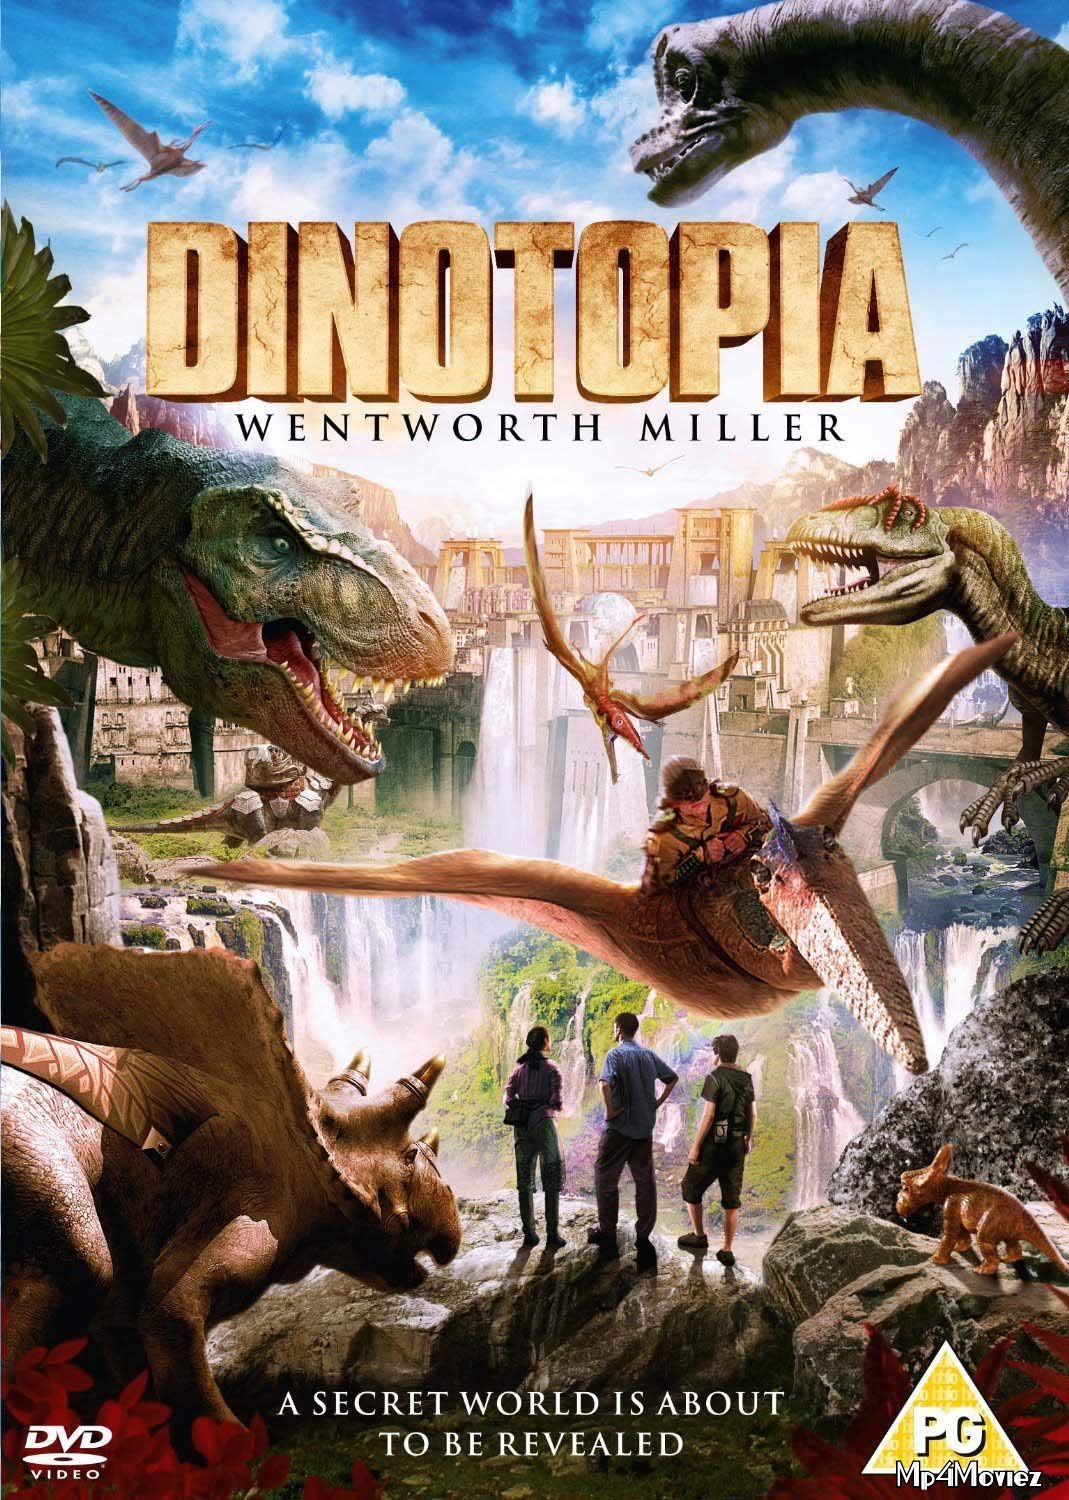 Dinotopia (2002) Part 3 Hindi Dubbed Movie download full movie